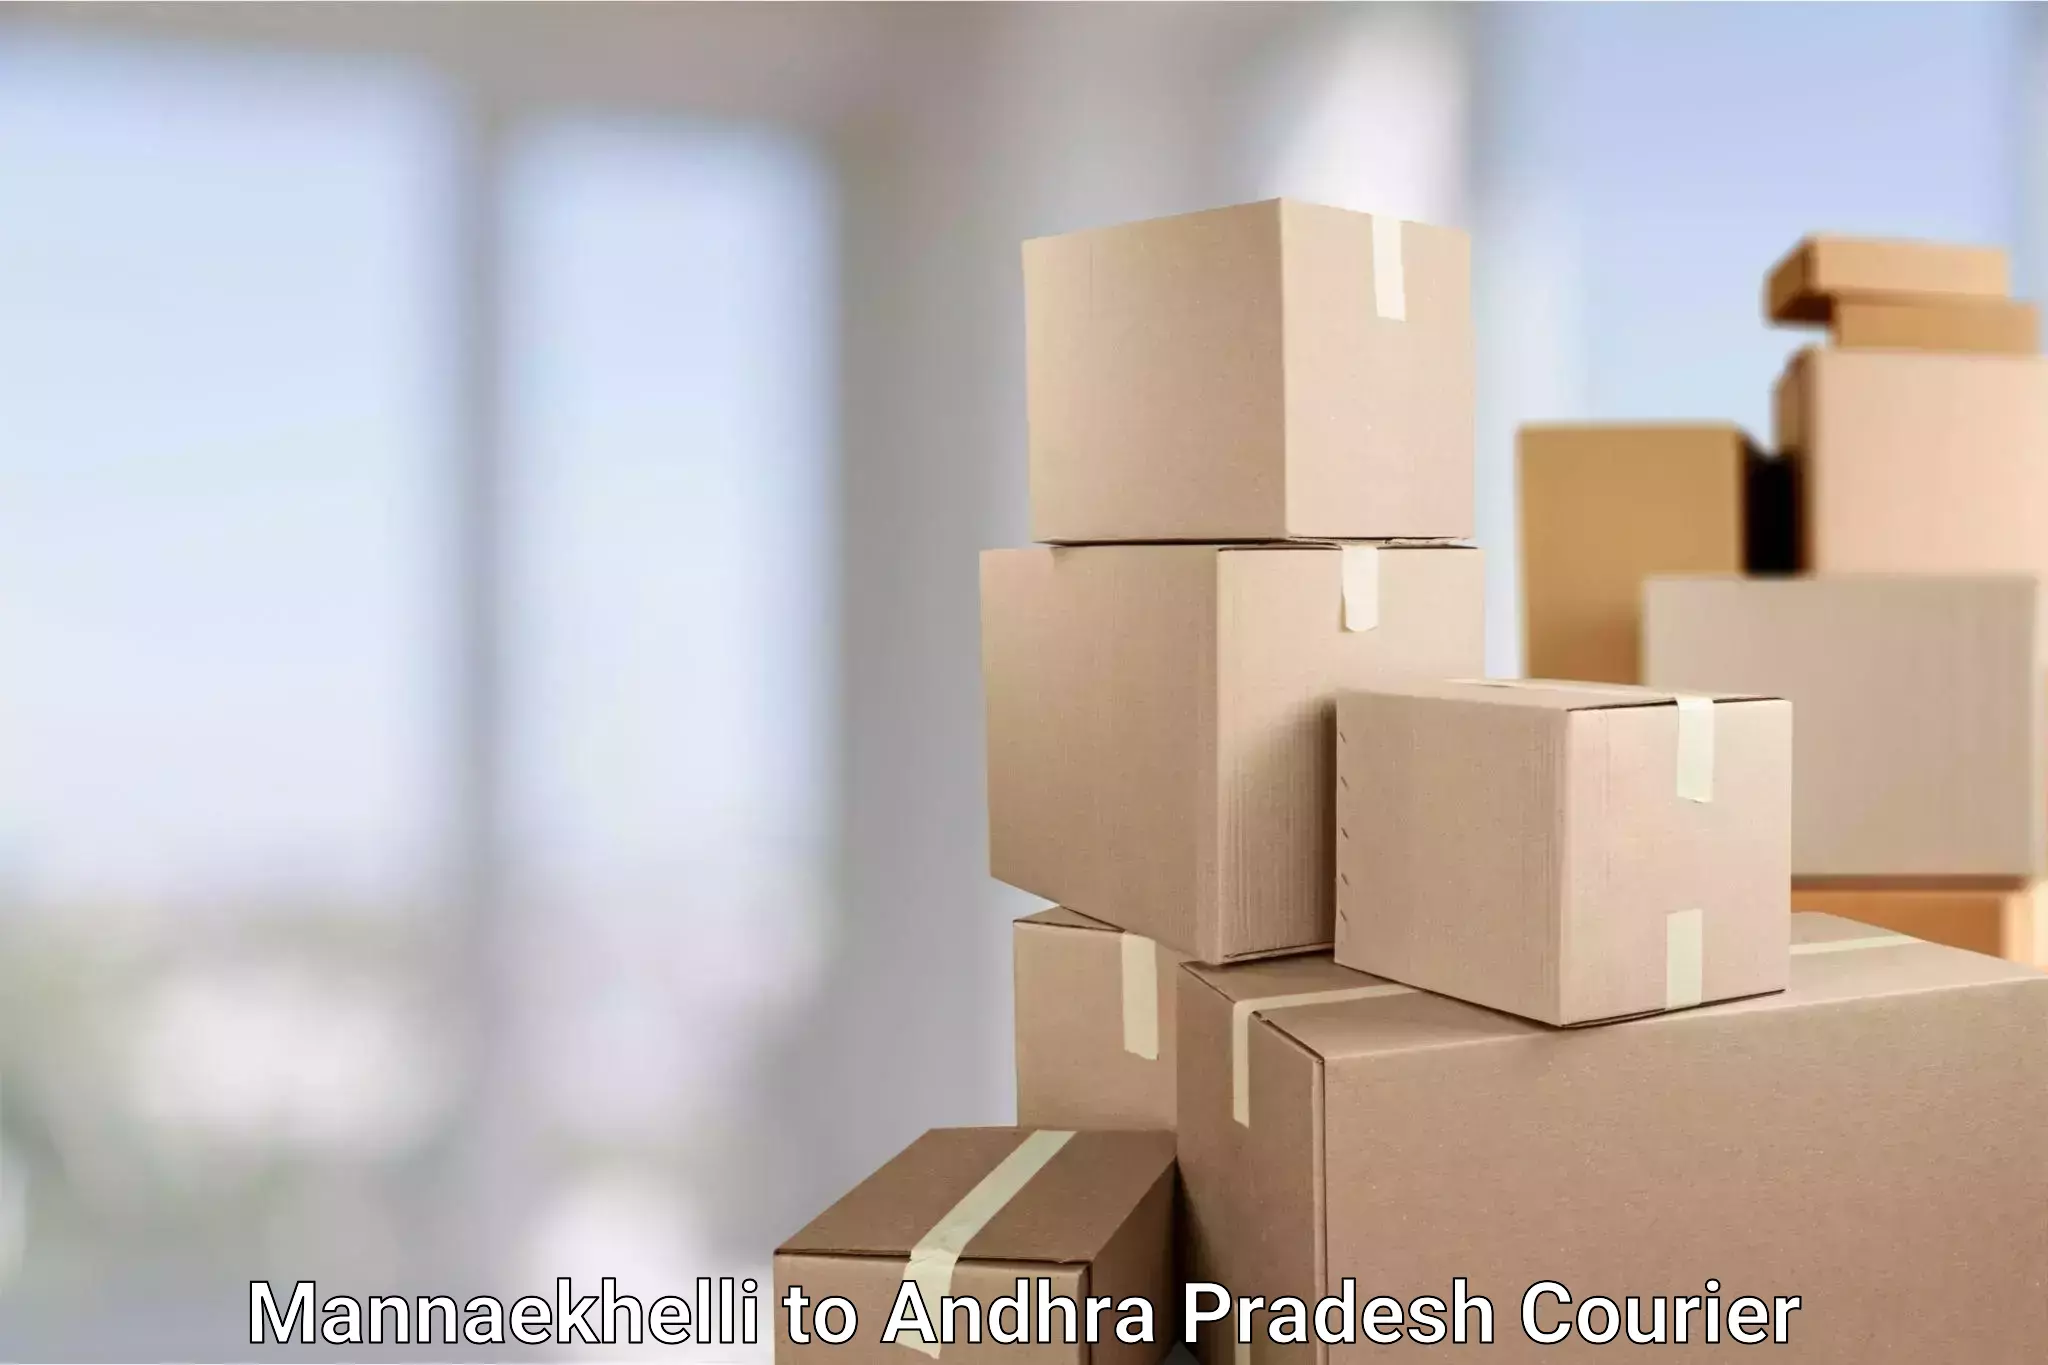 Overnight delivery services Mannaekhelli to Andhra Pradesh